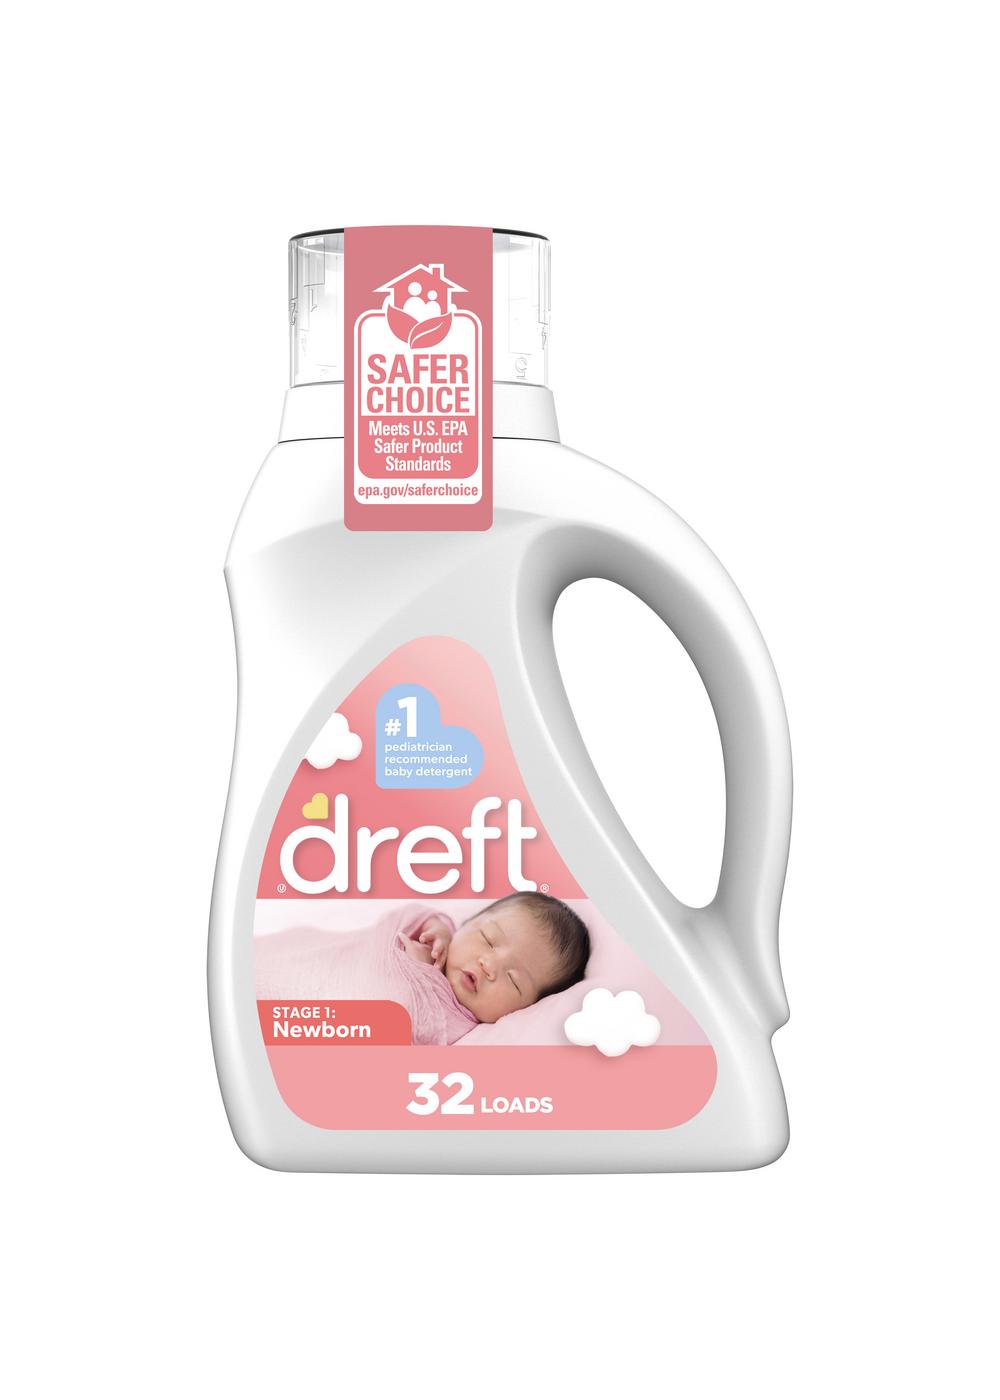 Baby Laundry Detergent - Dapple Baby